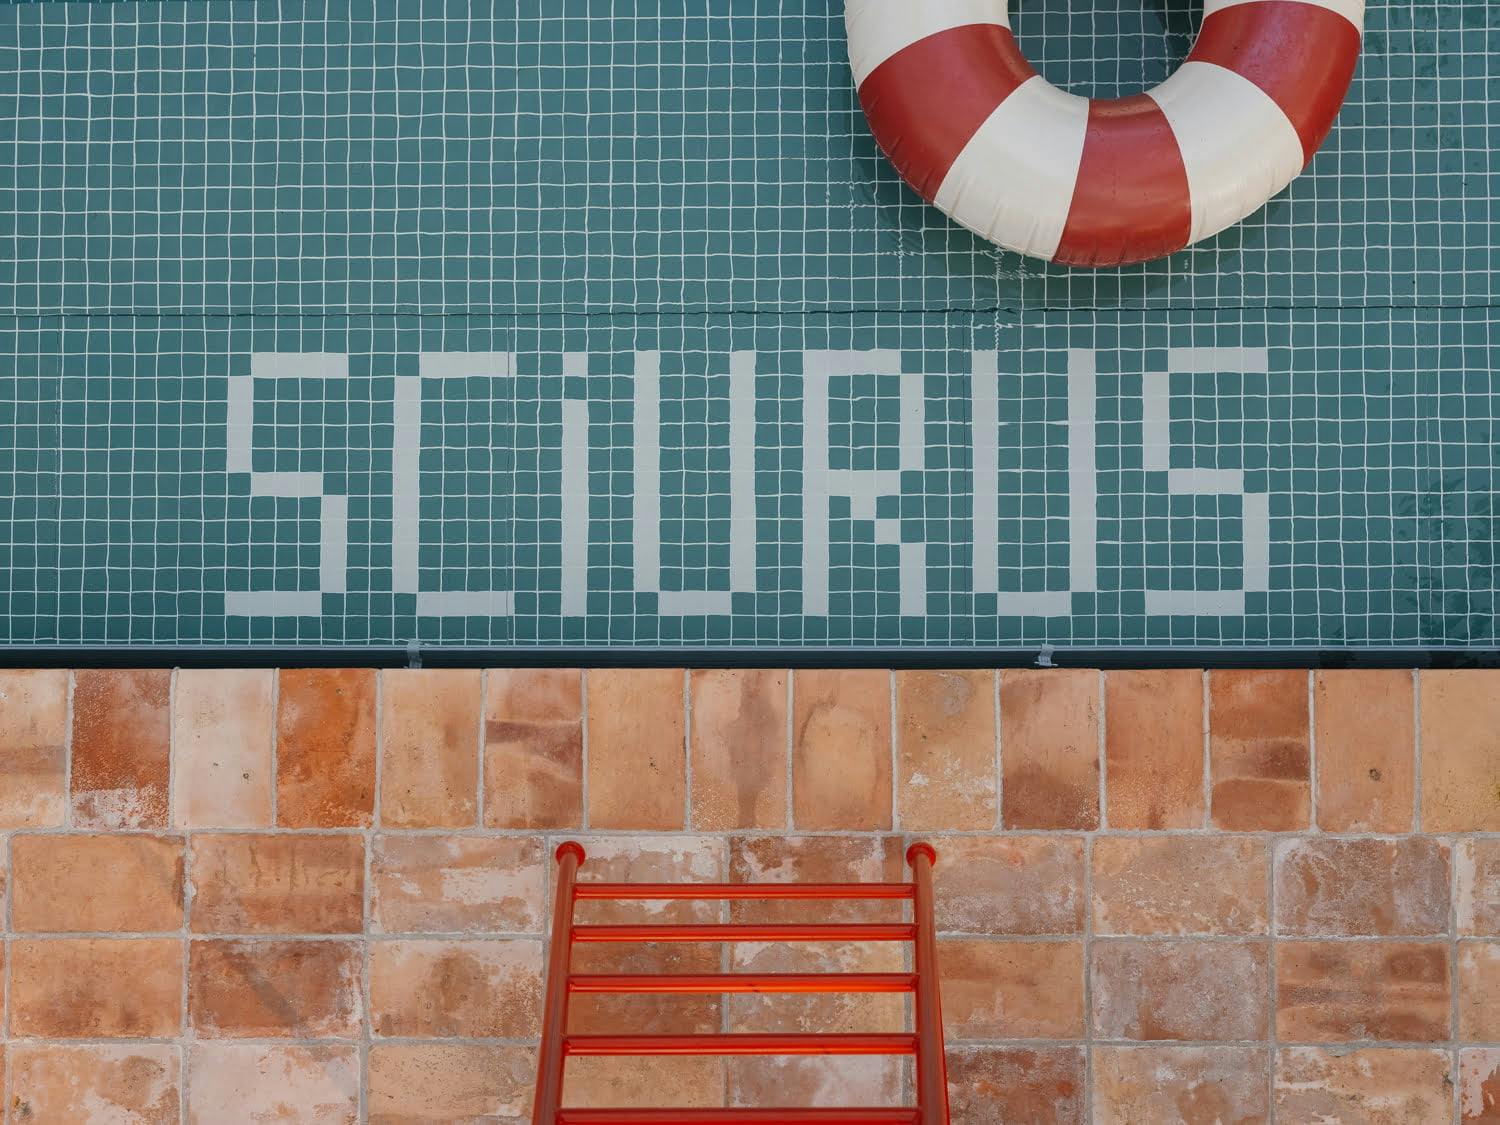 sciurus" tile inscription by the pool